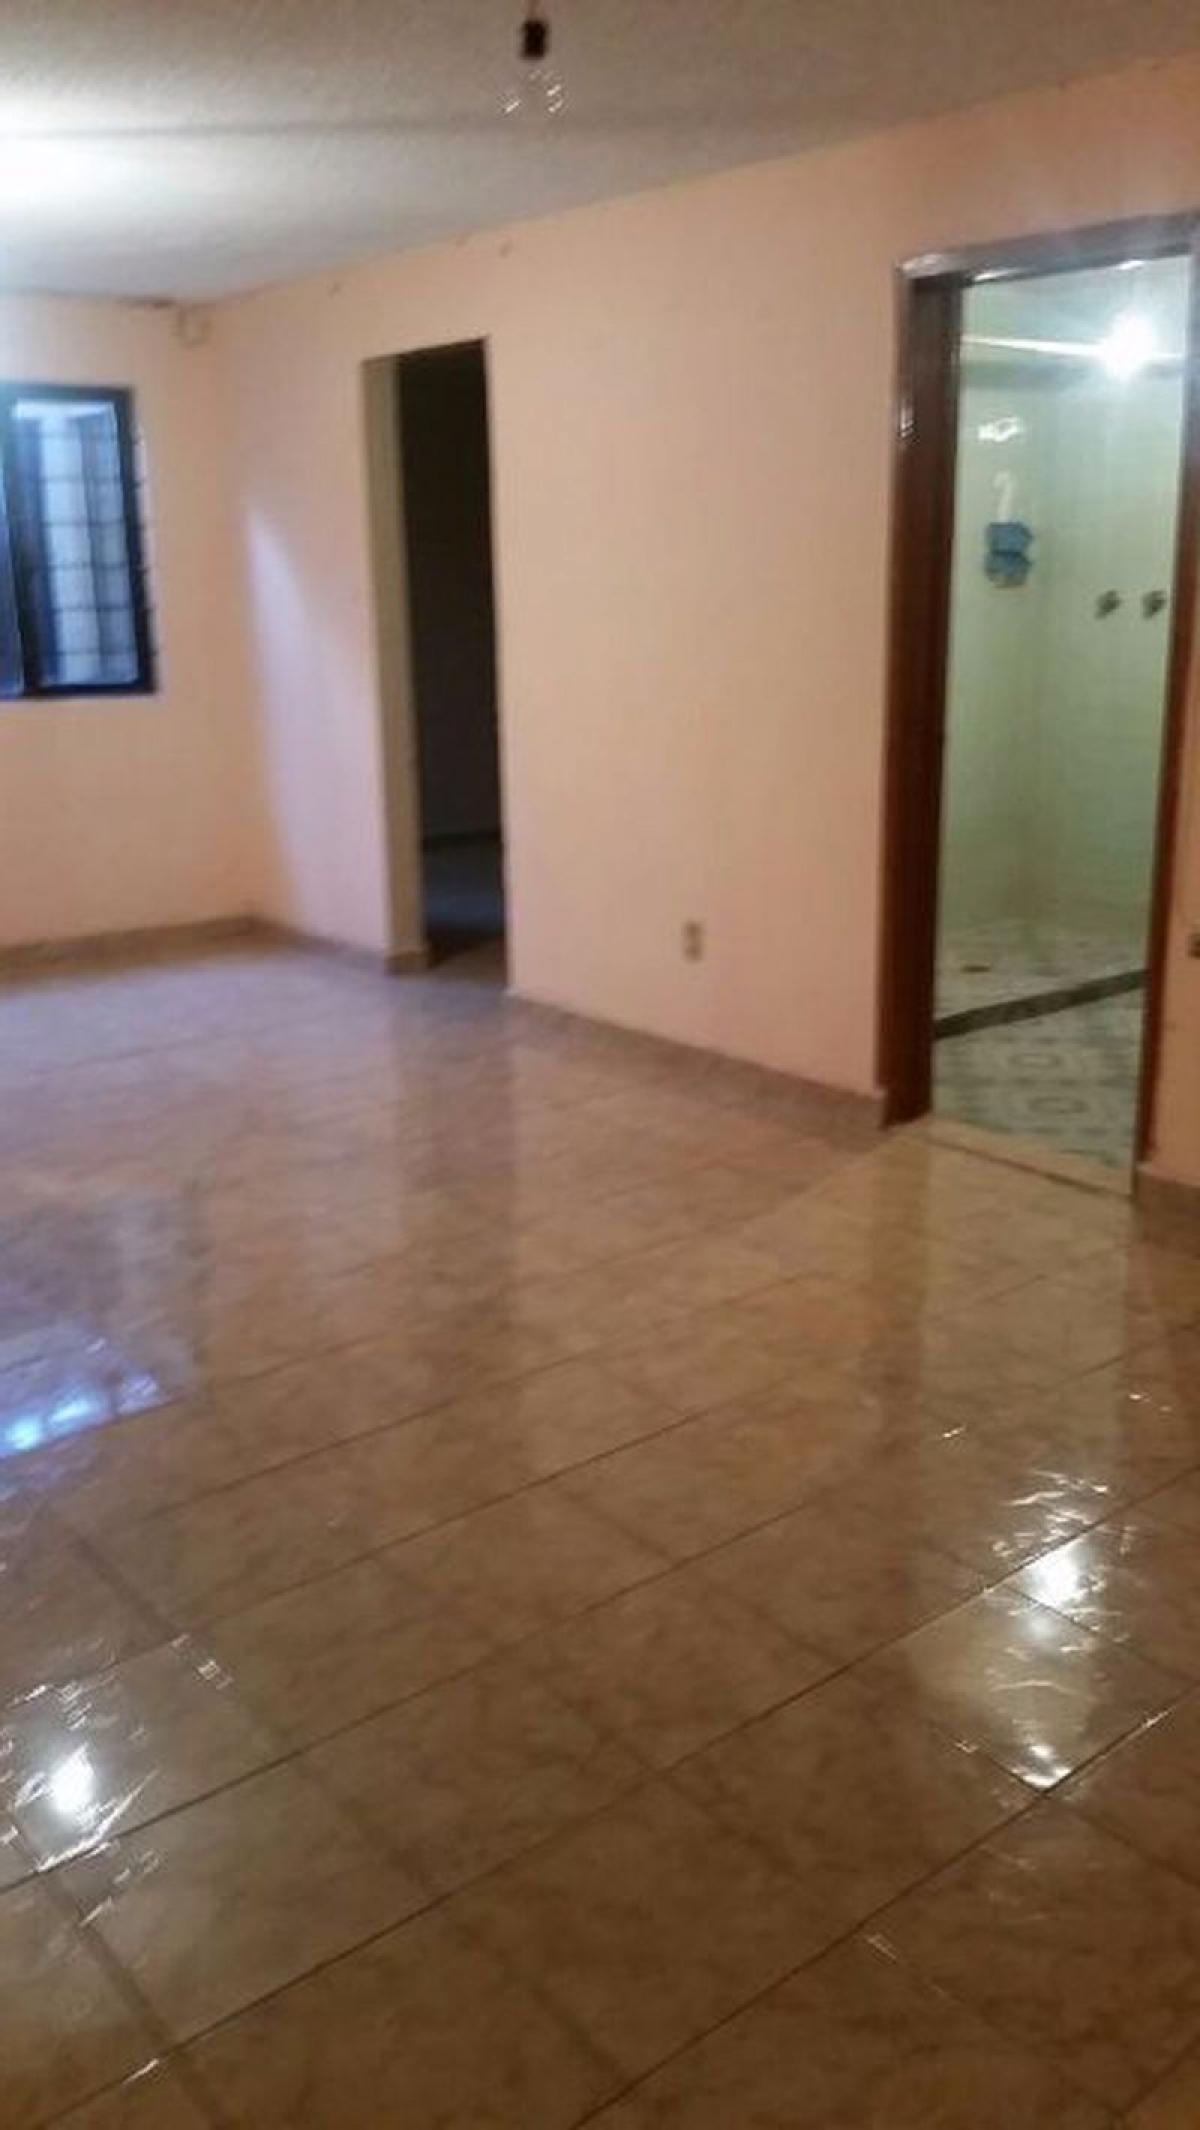 Picture of Apartment For Sale in Estado De Mexico, Mexico, Mexico